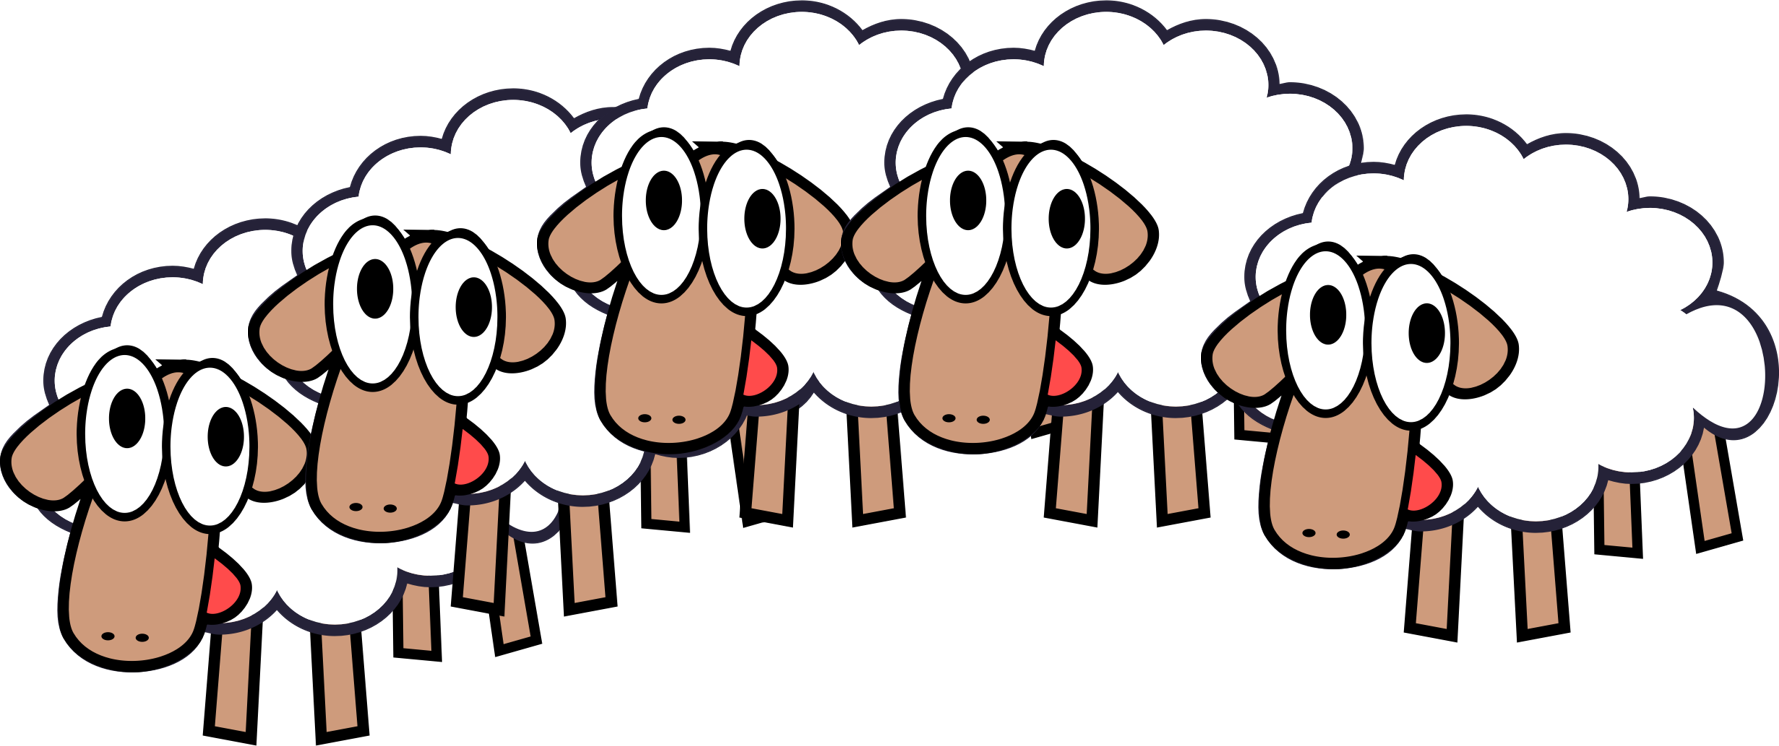 sheep clipart herd sheep